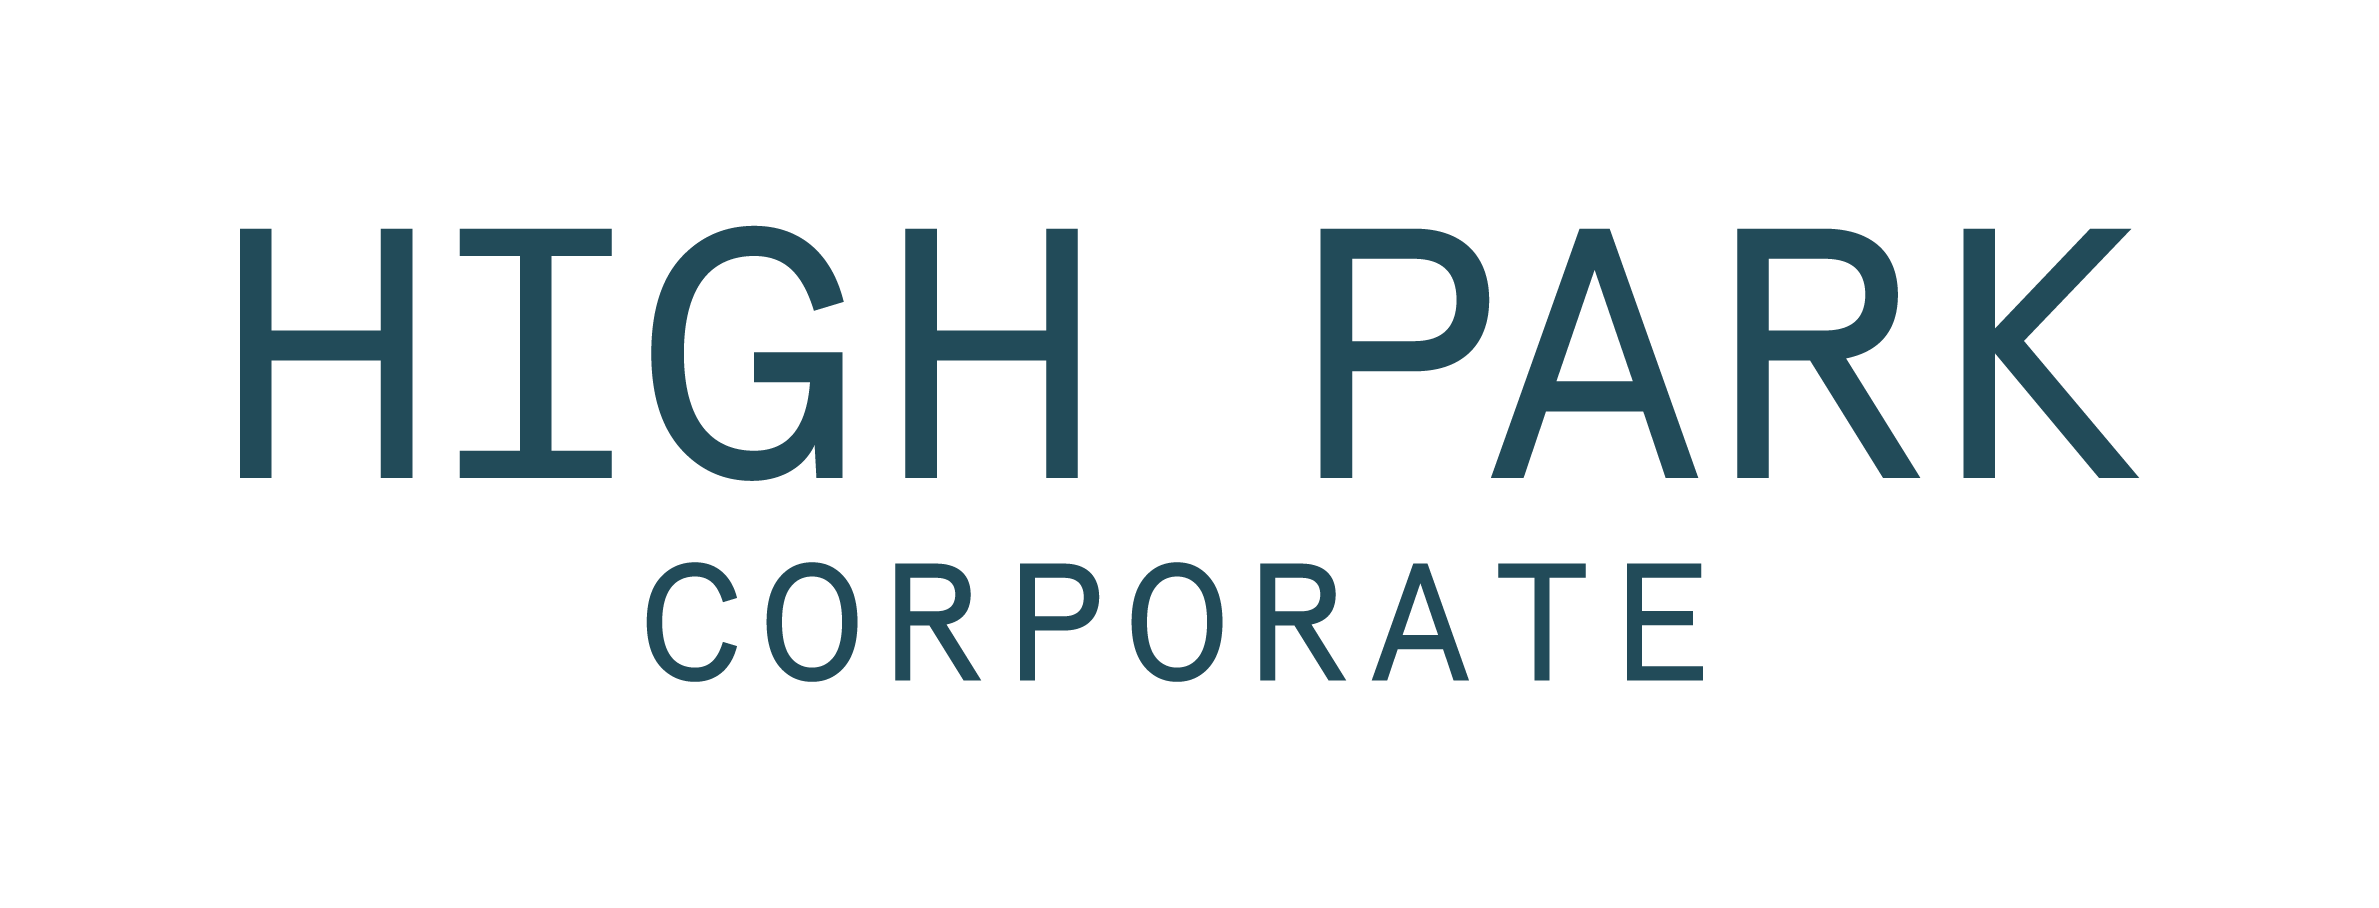 logos_high park